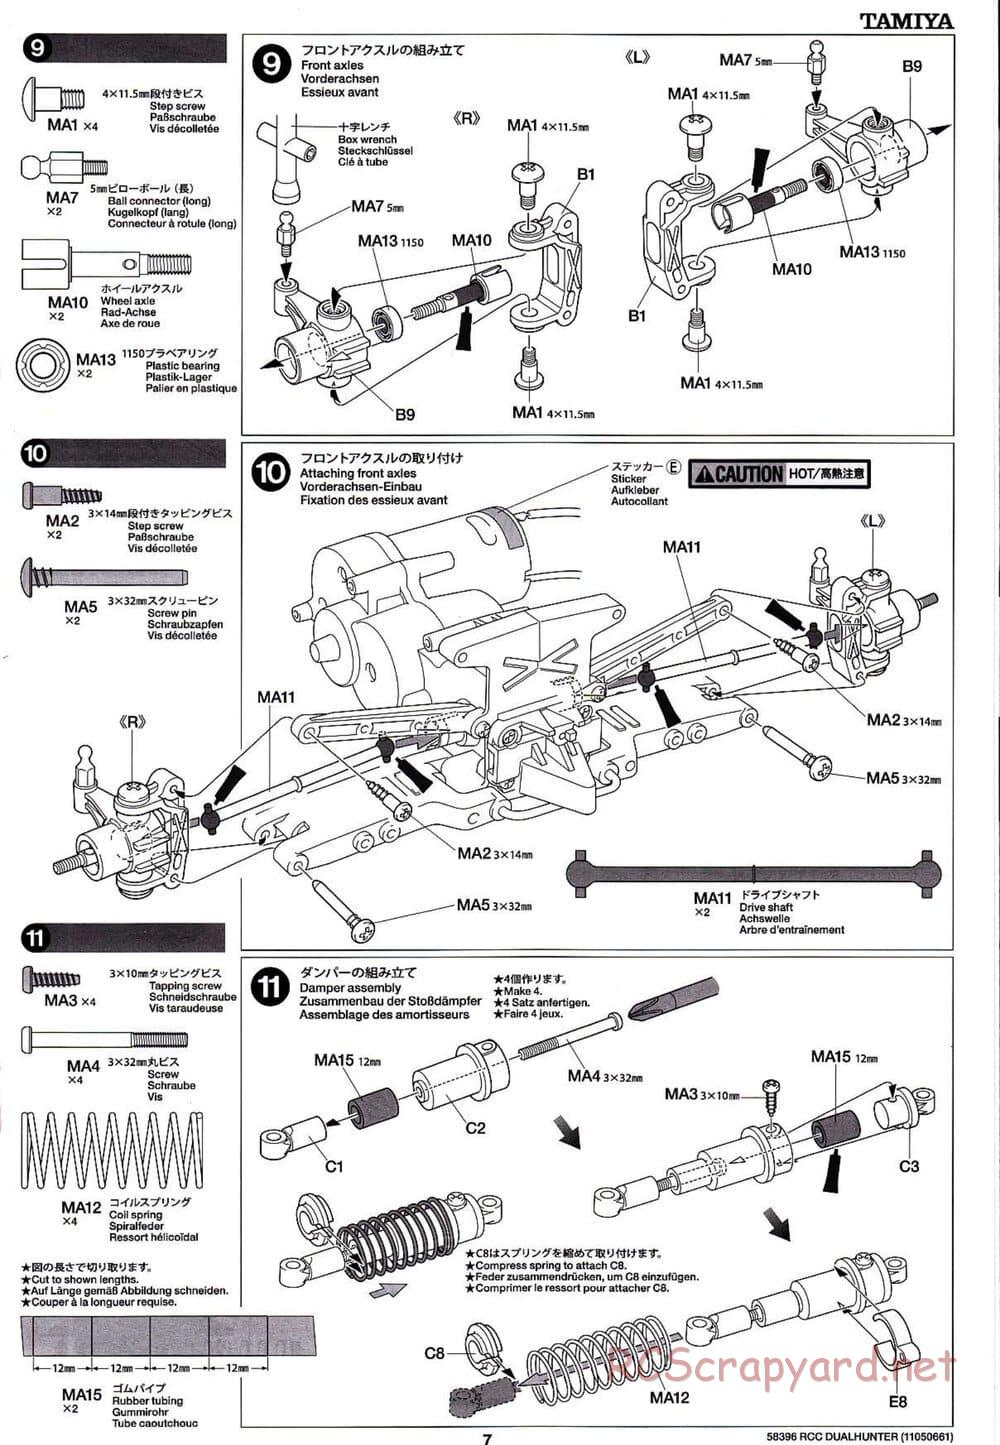 Tamiya - Dualhunter - WR-01 Chassis - Manual - Page 7